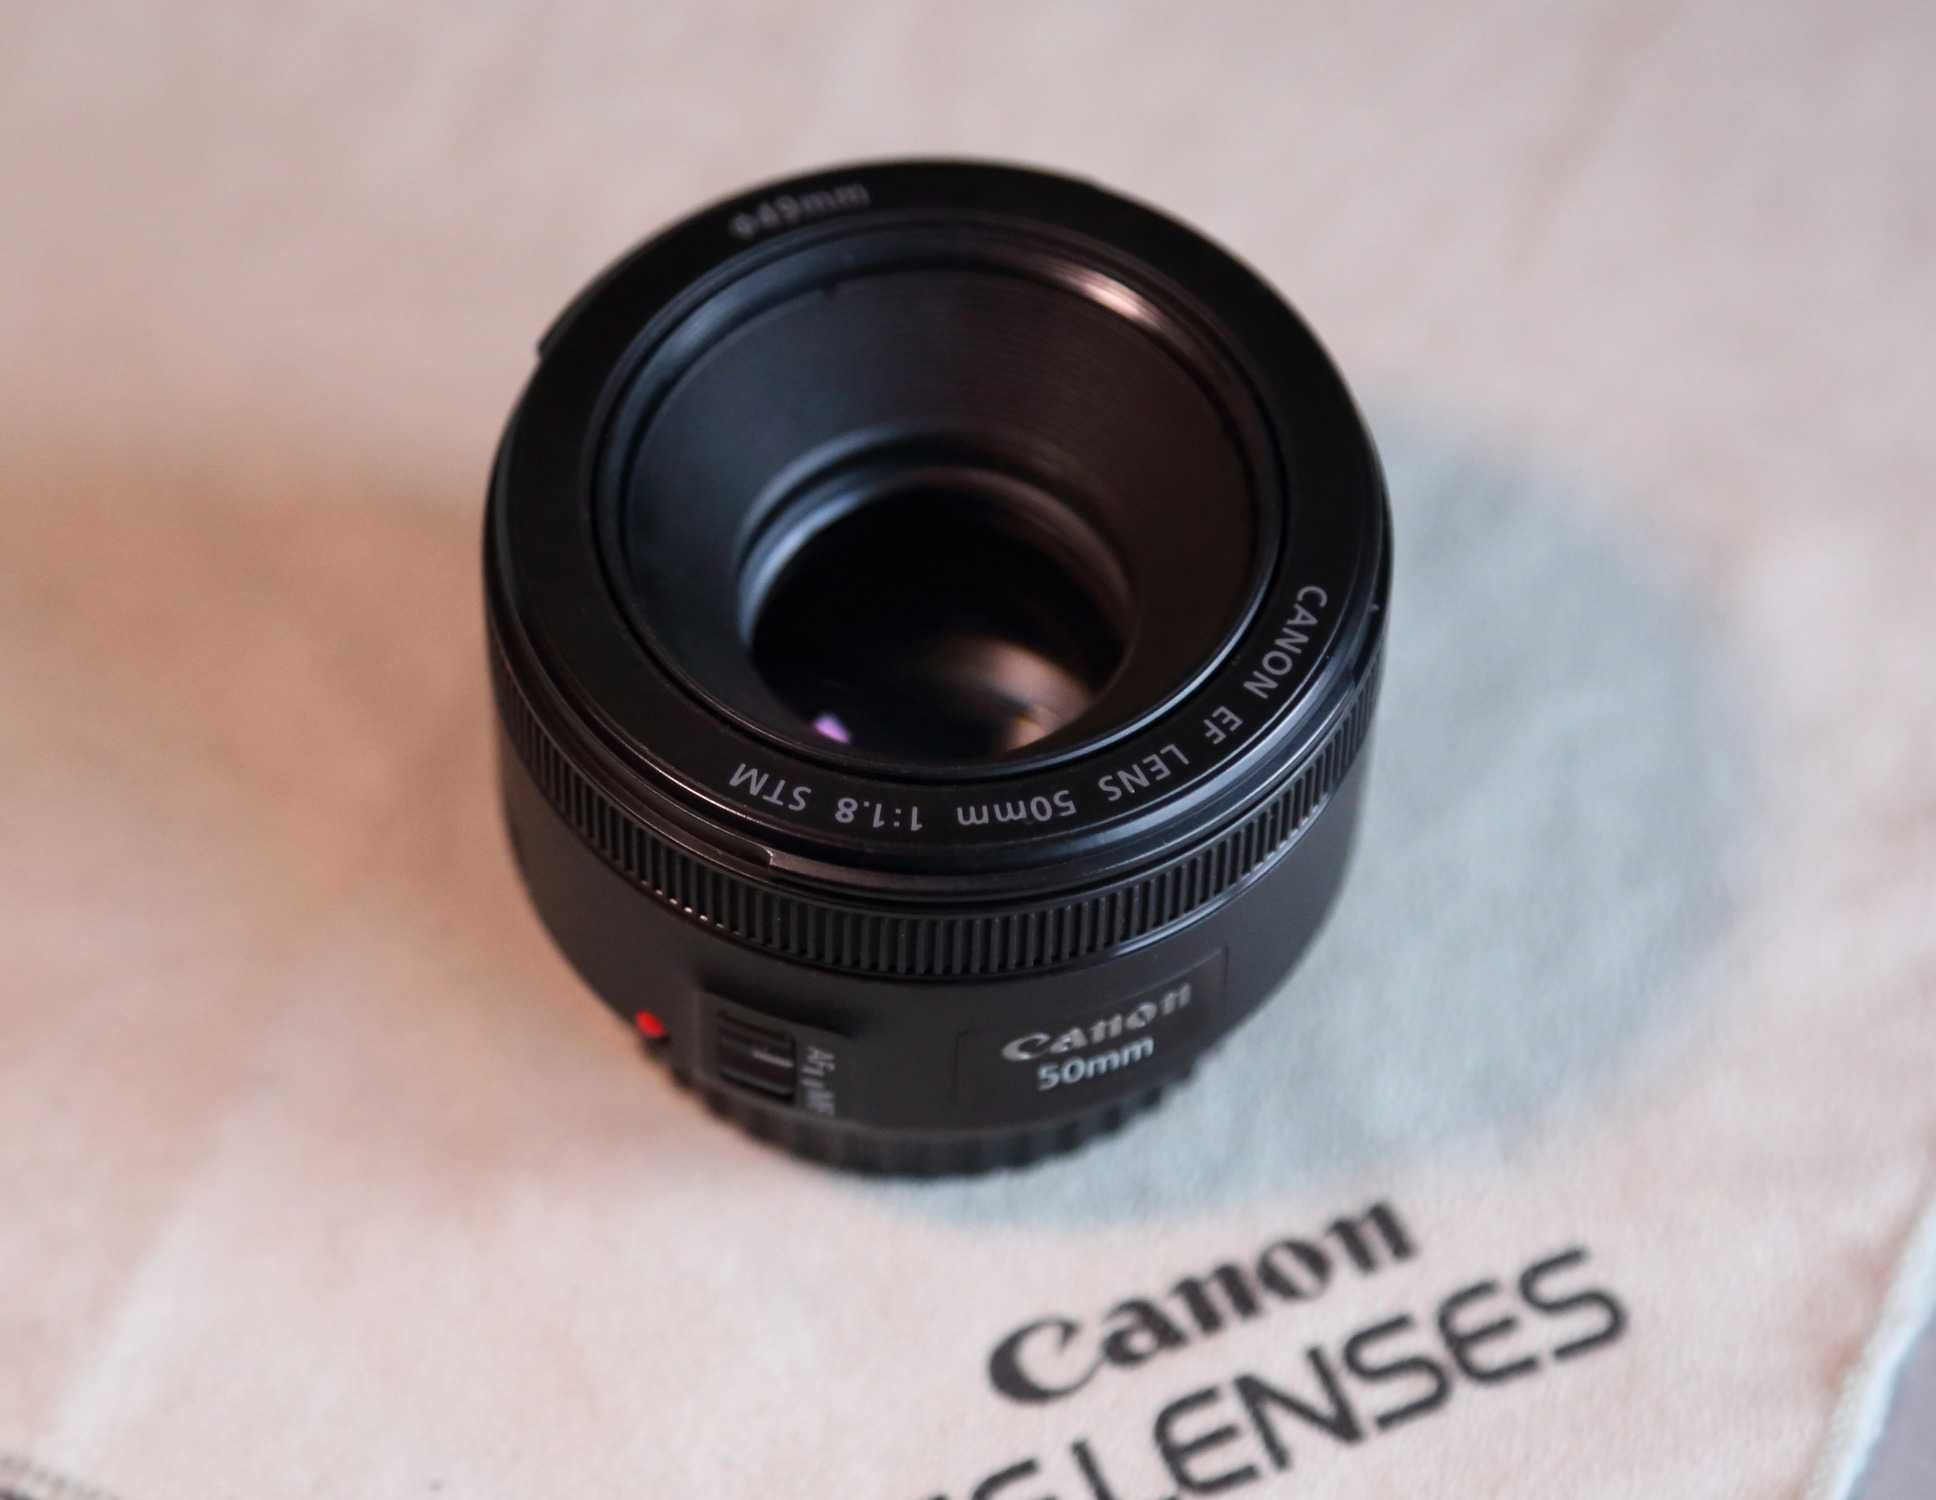 Об'єктив Canon EF 50mm f/1.8 STM